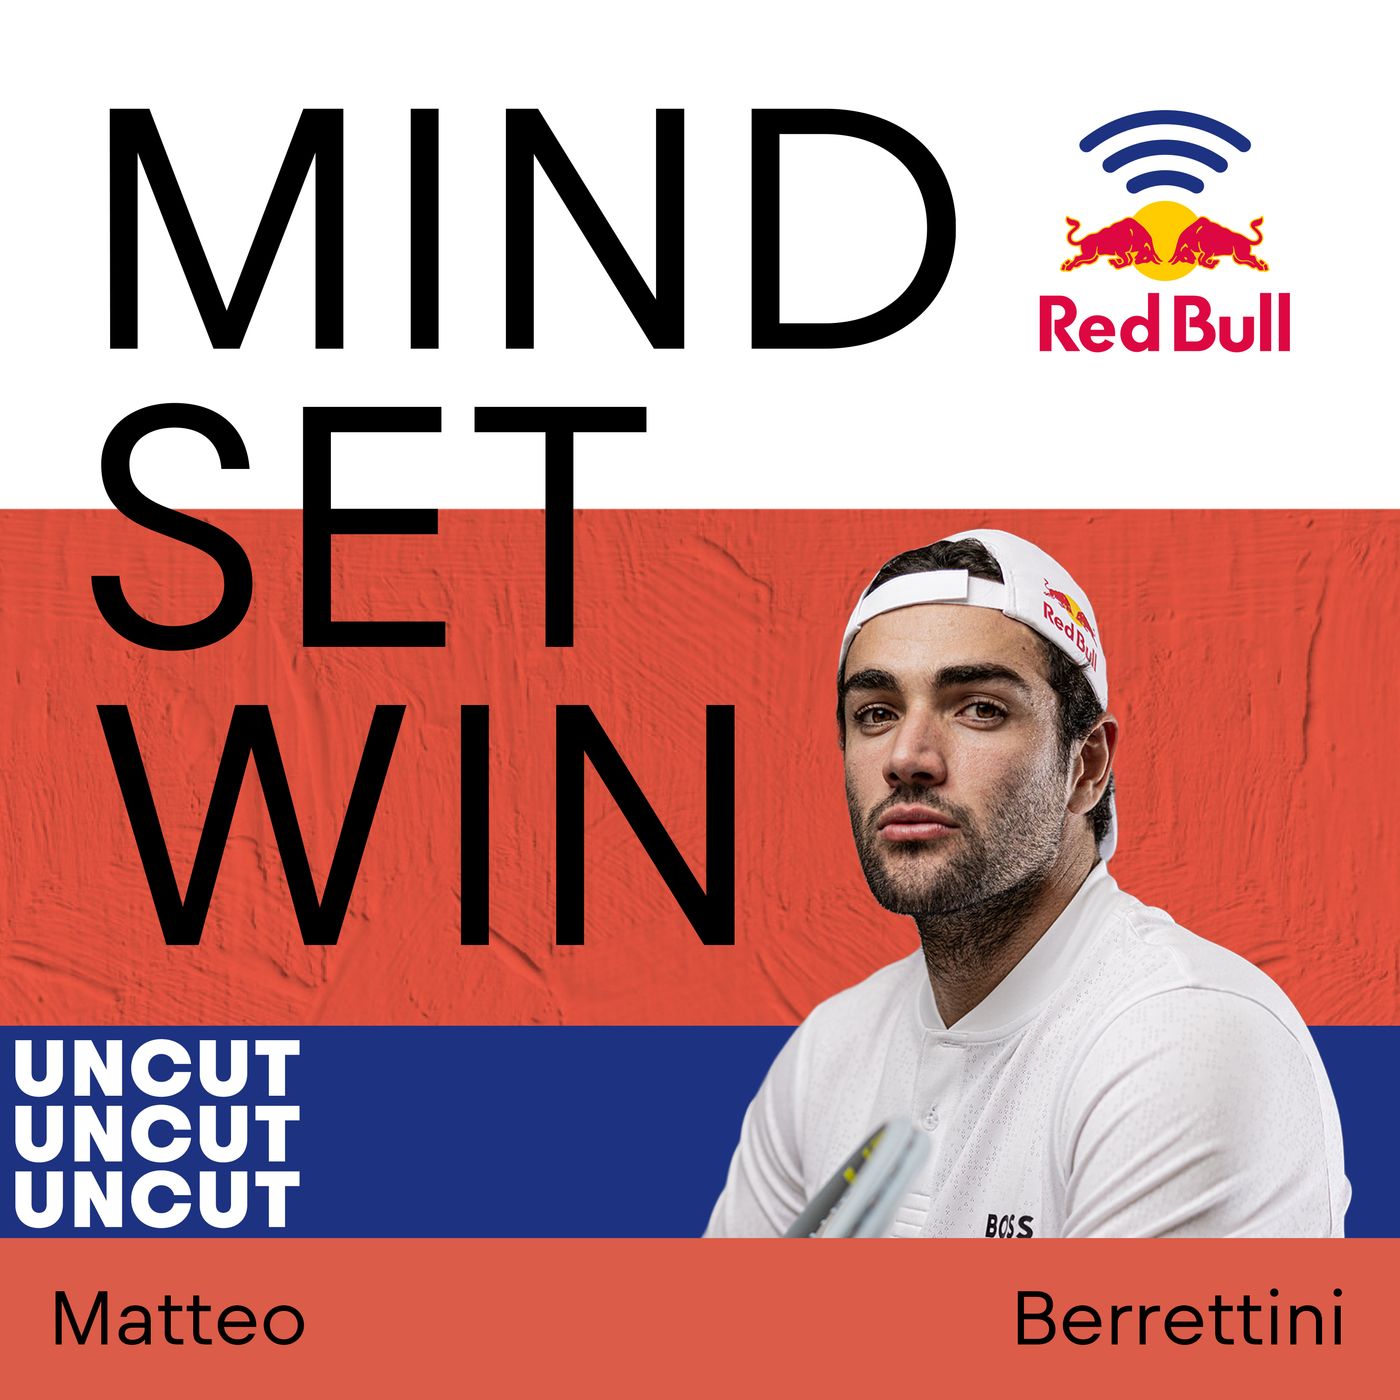 UNCUT: Full-length interview with Wimbledon finalist and top tennis talent Matteo Berrettini